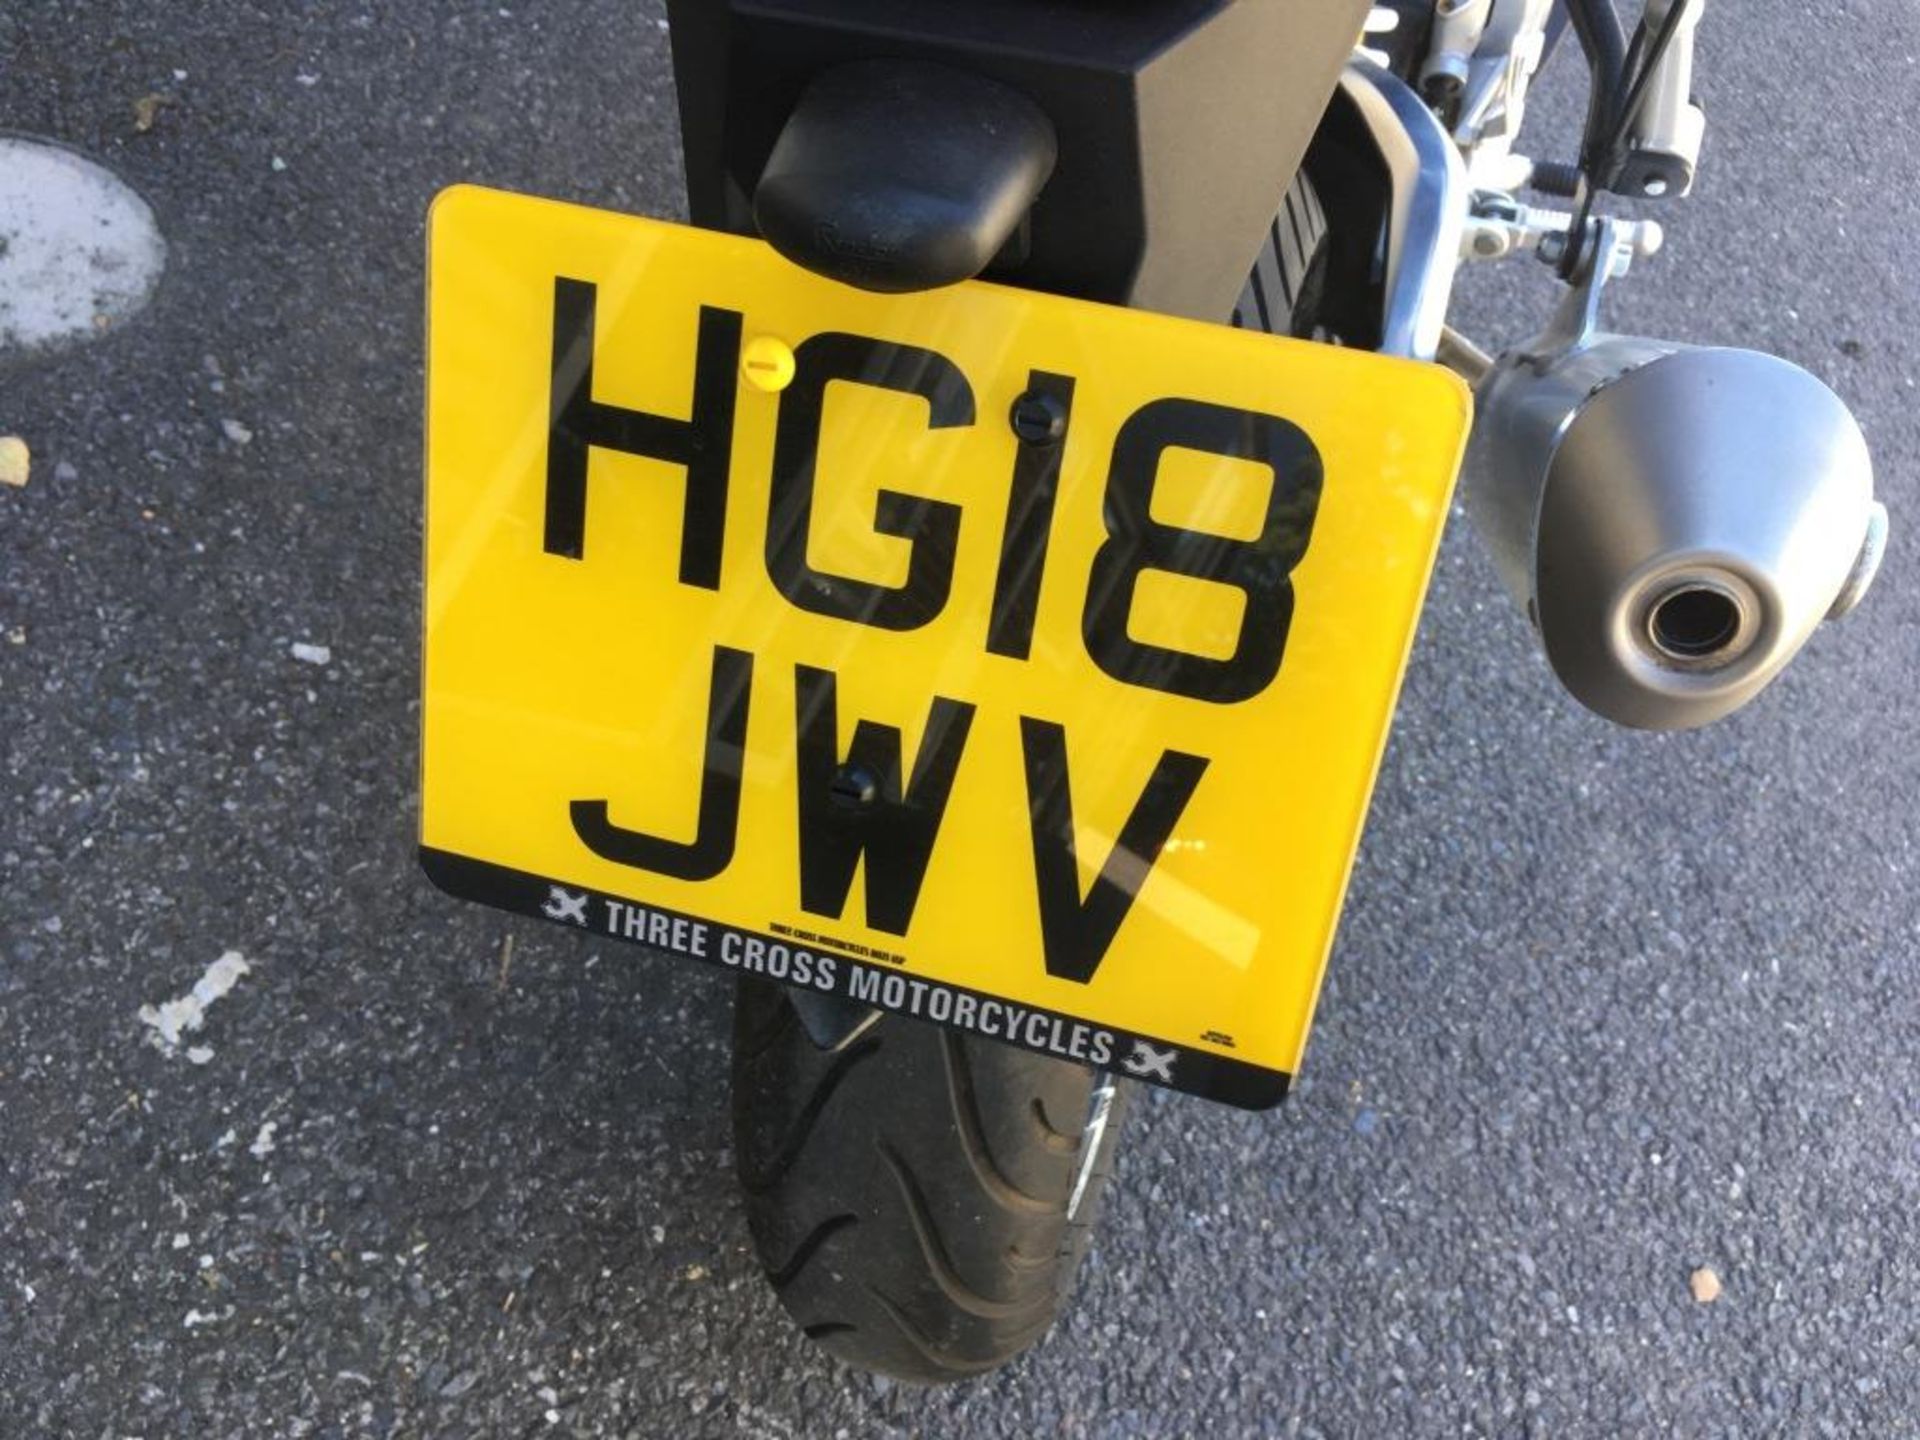 Rieju RS3 125 Pro motorcycle, Registration number: HG18 JWV, Date of Registration: 05/07/2018, - Image 9 of 12